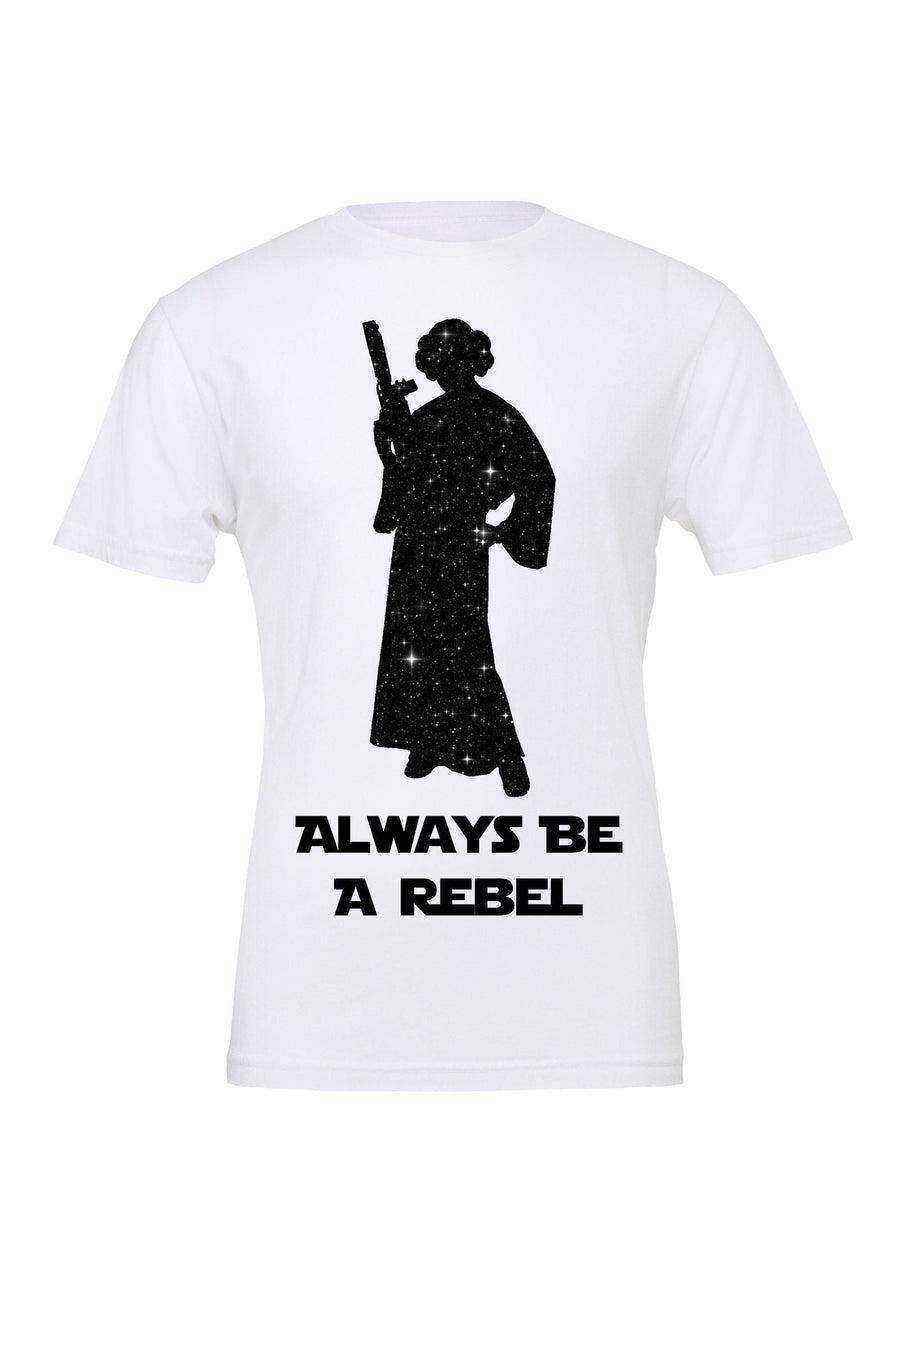 Star Wars Princess Leia Galaxy Background Tee | Always Be A Rebel - Dylan's Tees